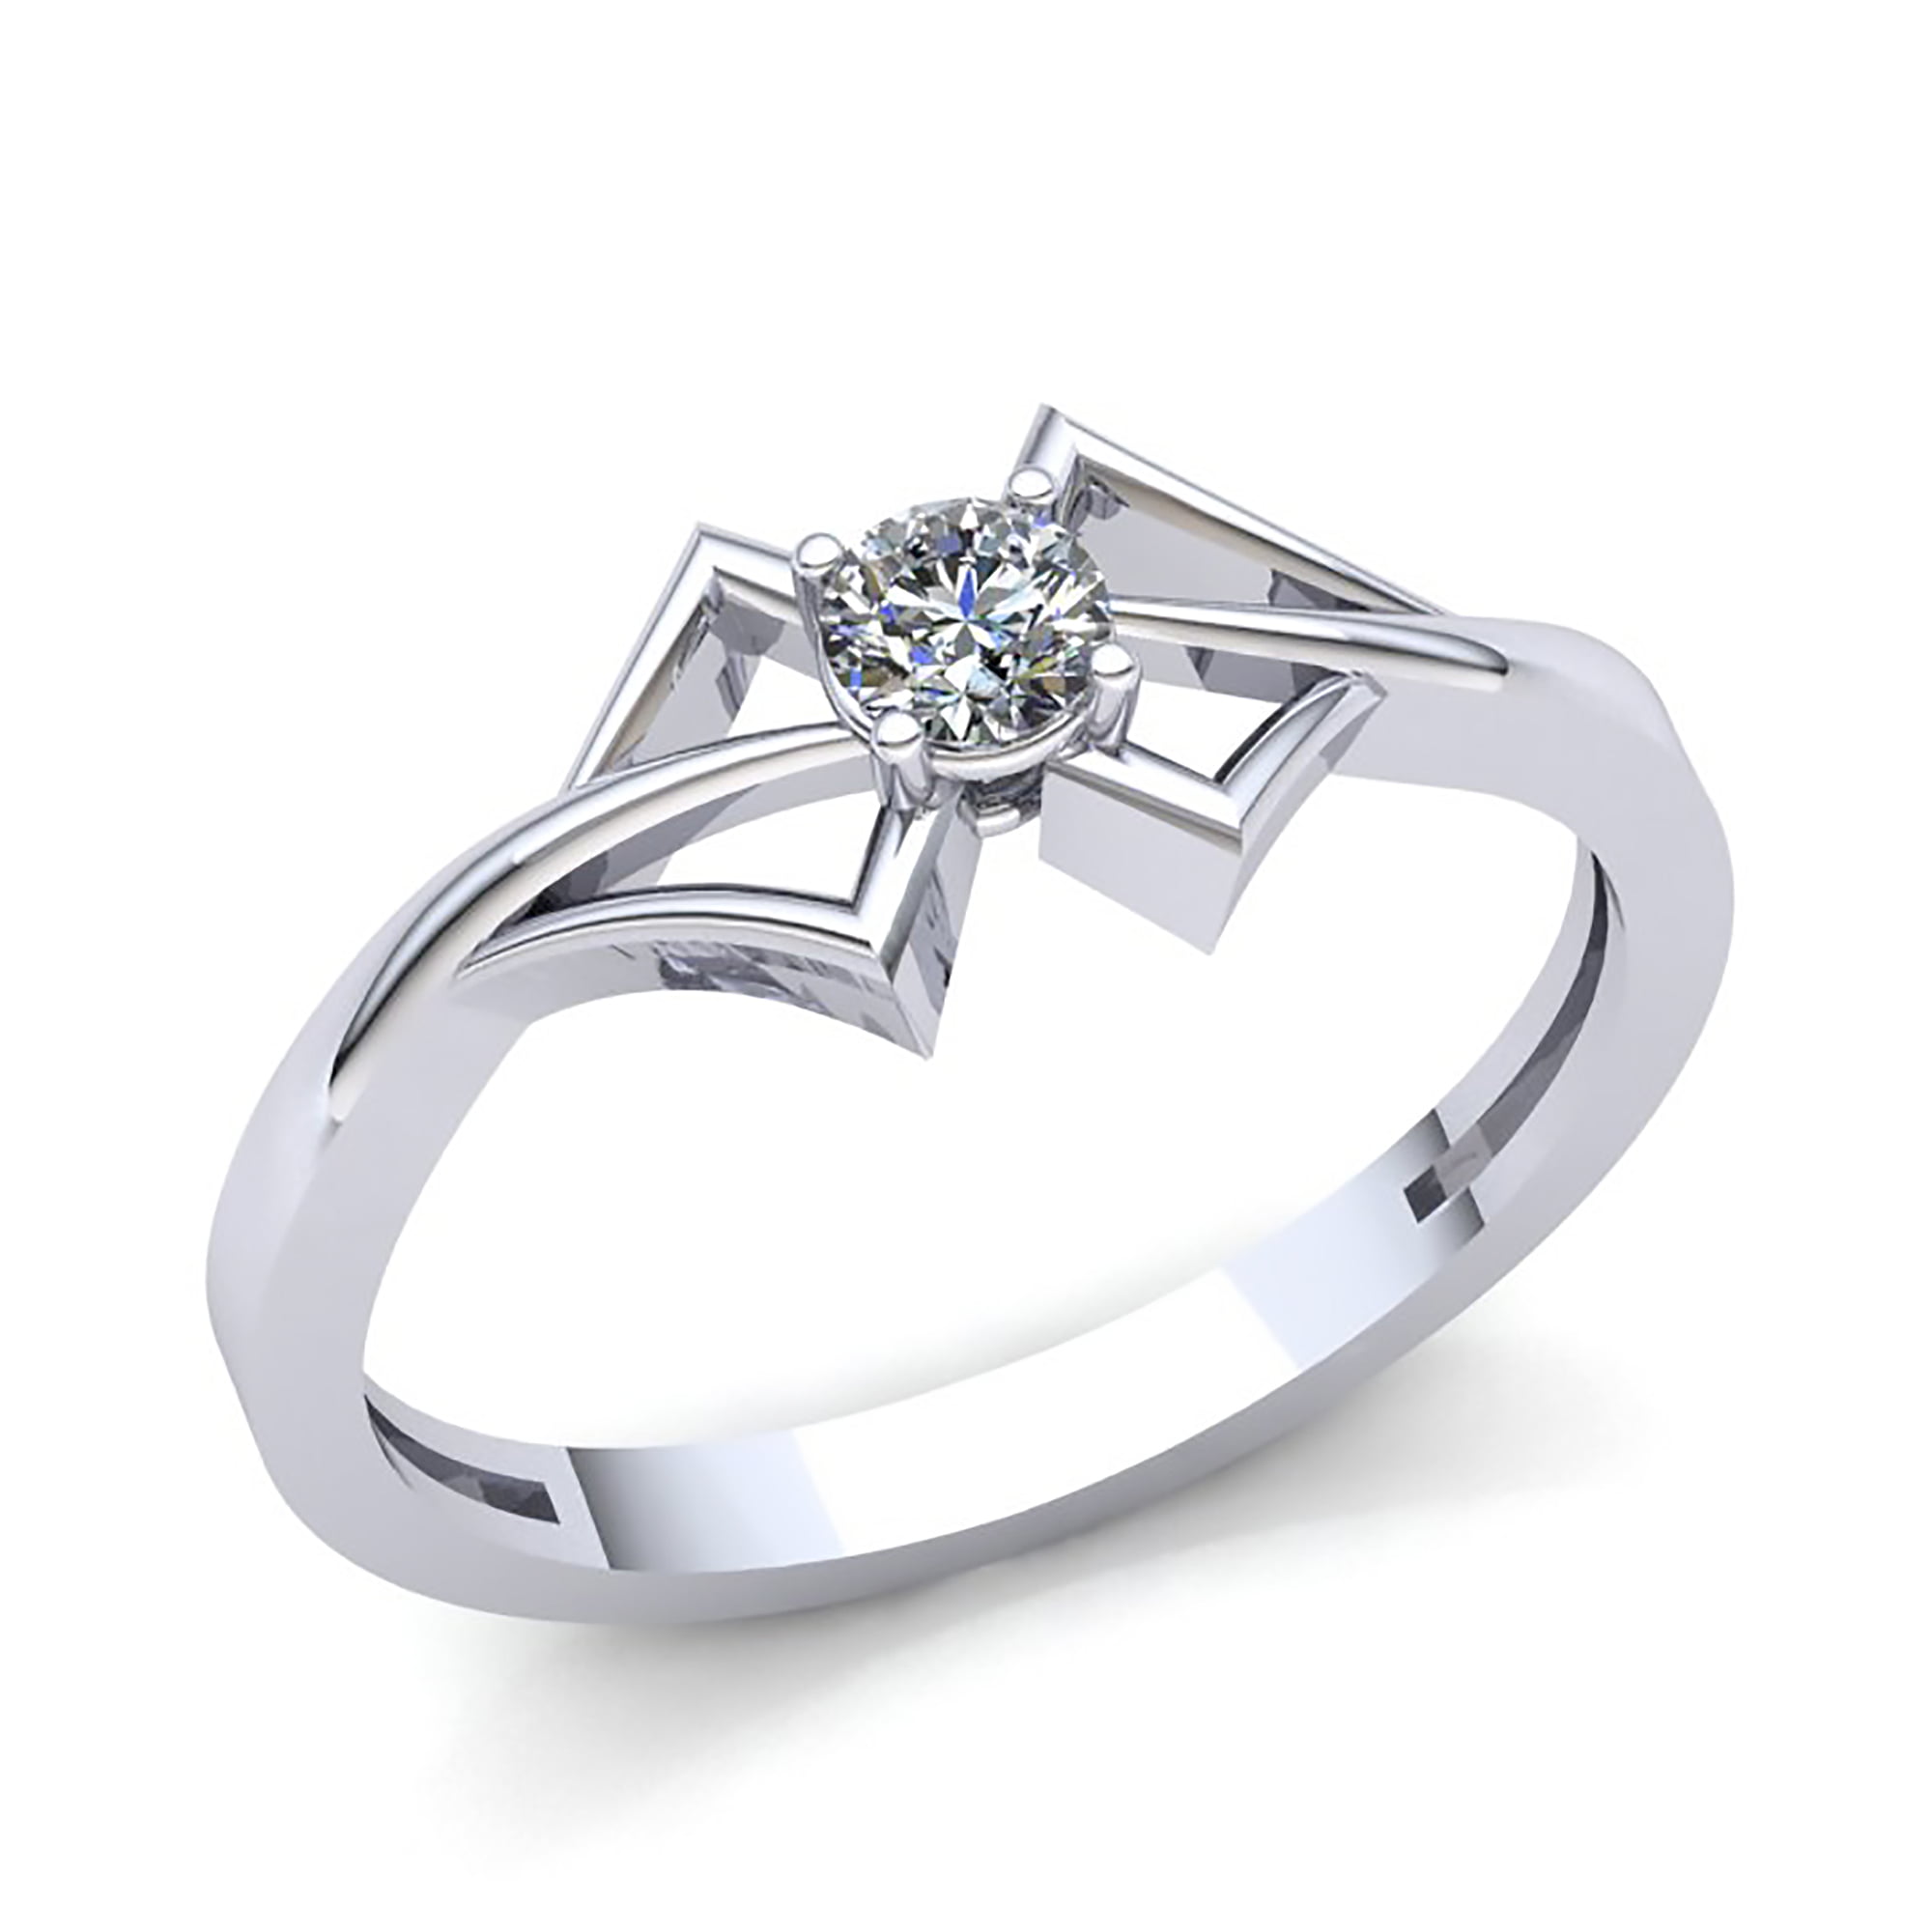 Rose Gold Solitaire Wedding Ring,Black CZ Wedding Ring,Solitaire Ring,Ladies Wedding Ring,Anniversary Ring,Engagement Ring,18K Rose Gold